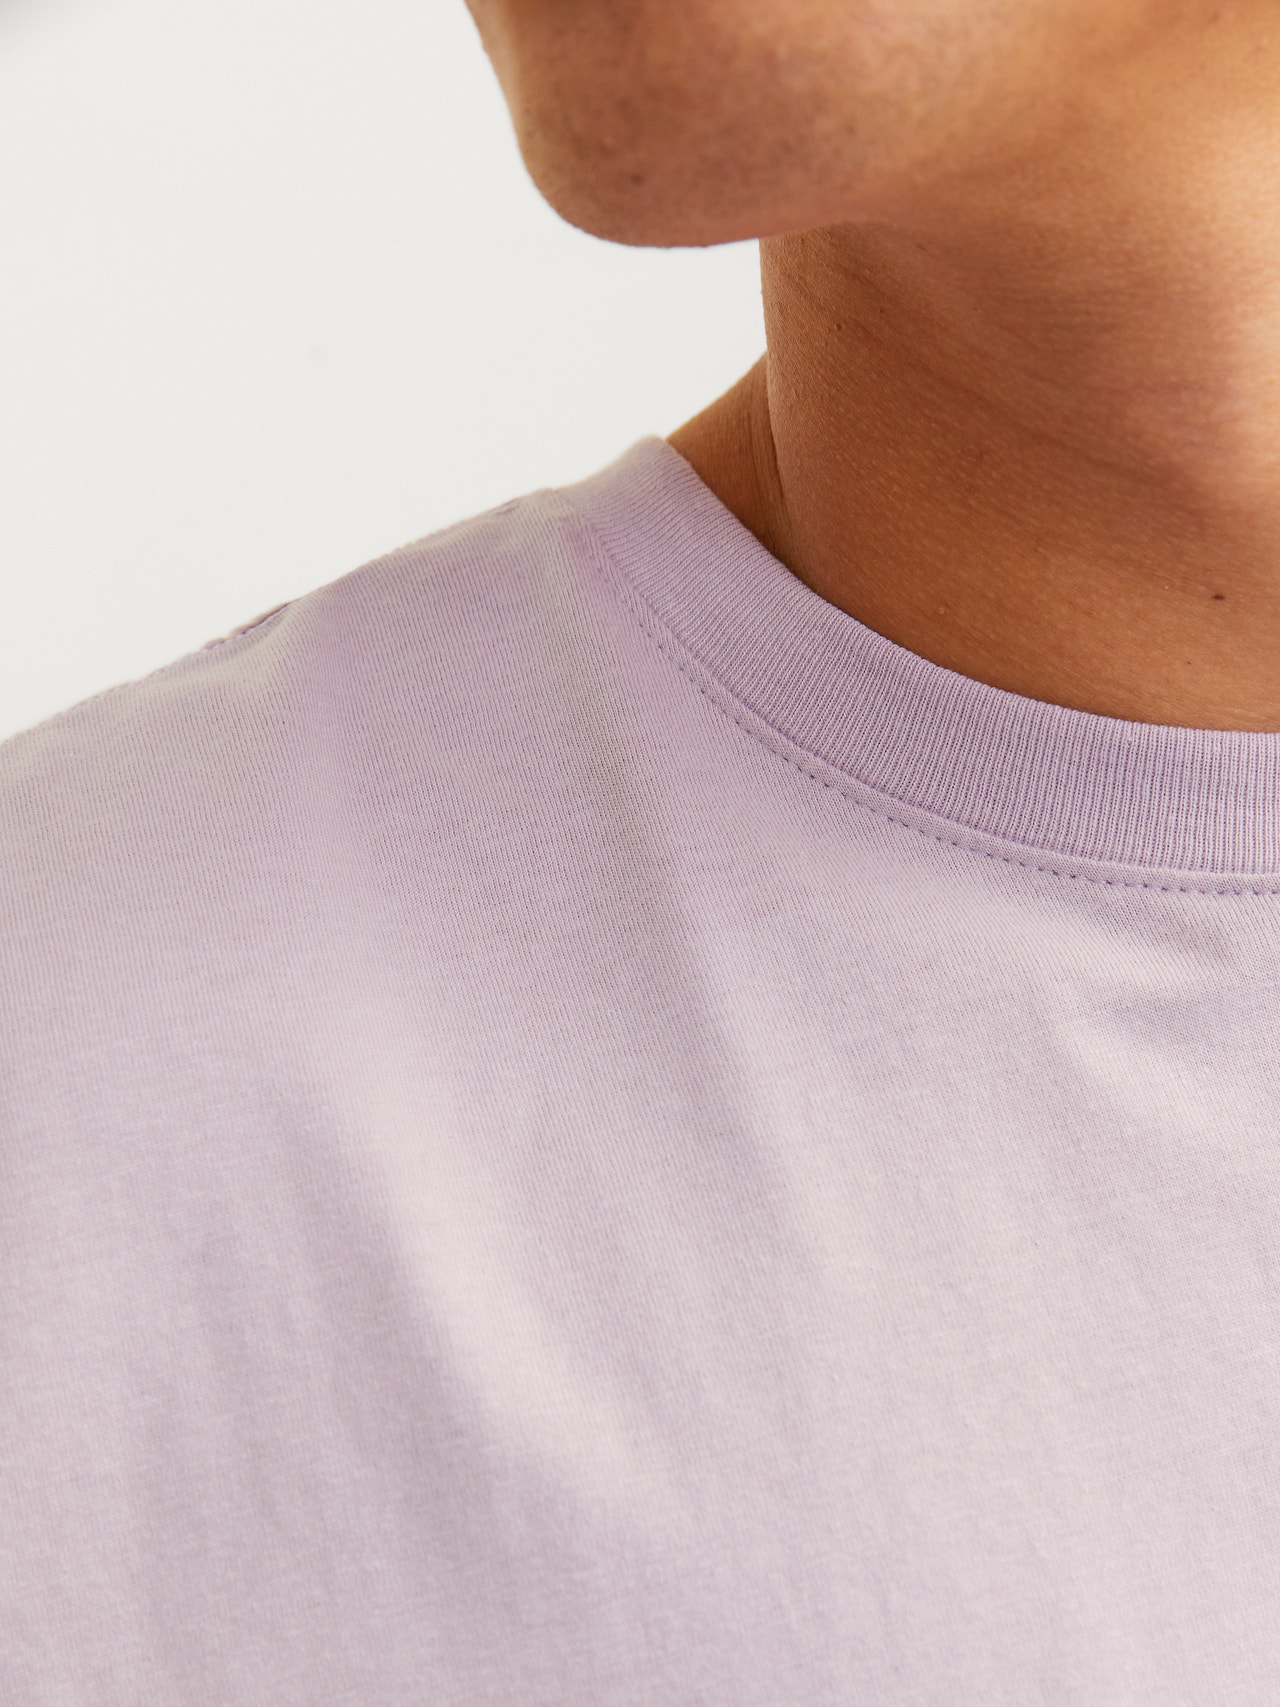 Jack & Jones T-shirt Estampar Decote Redondo -Lavender Frost - 12255569